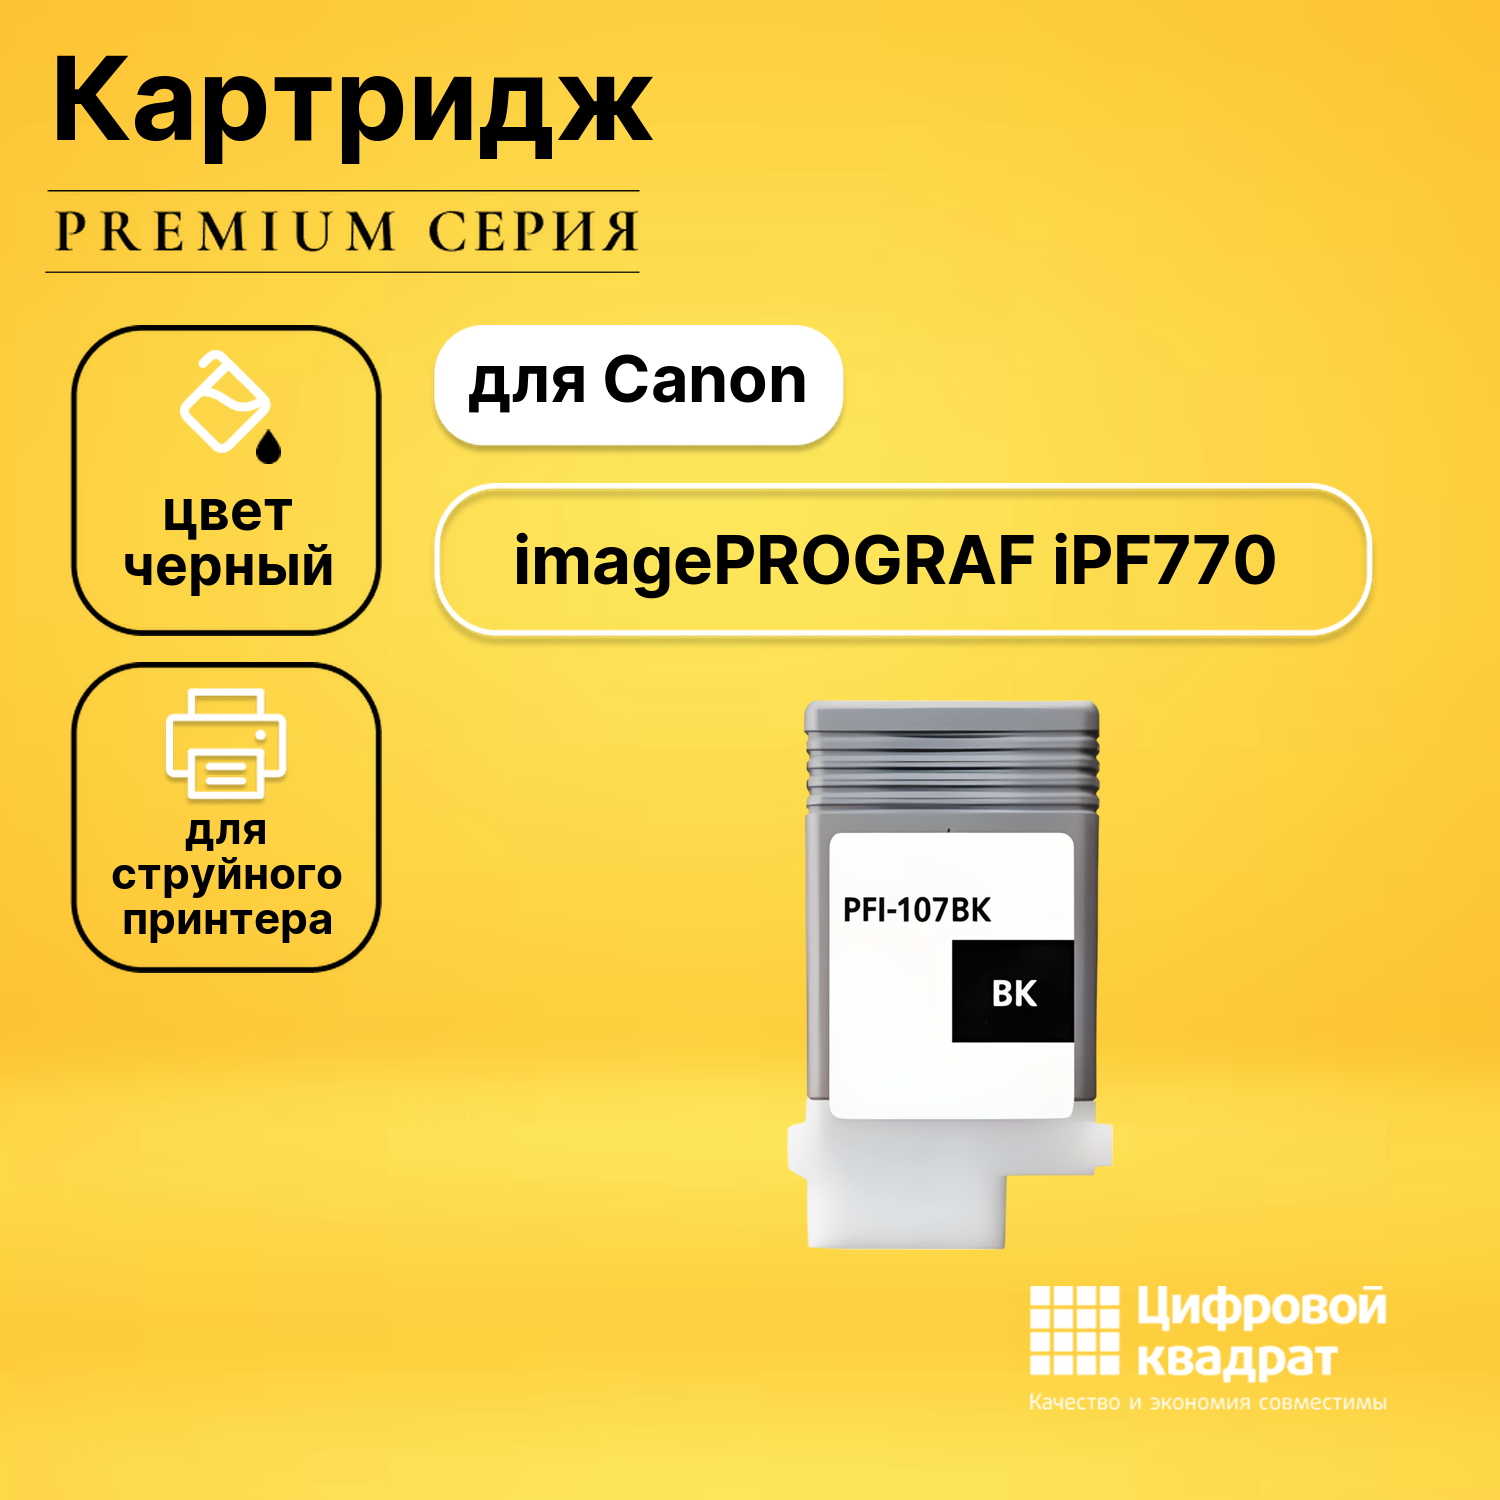 Картридж DS для Canon imagePROGRAF iPF770 совместимый